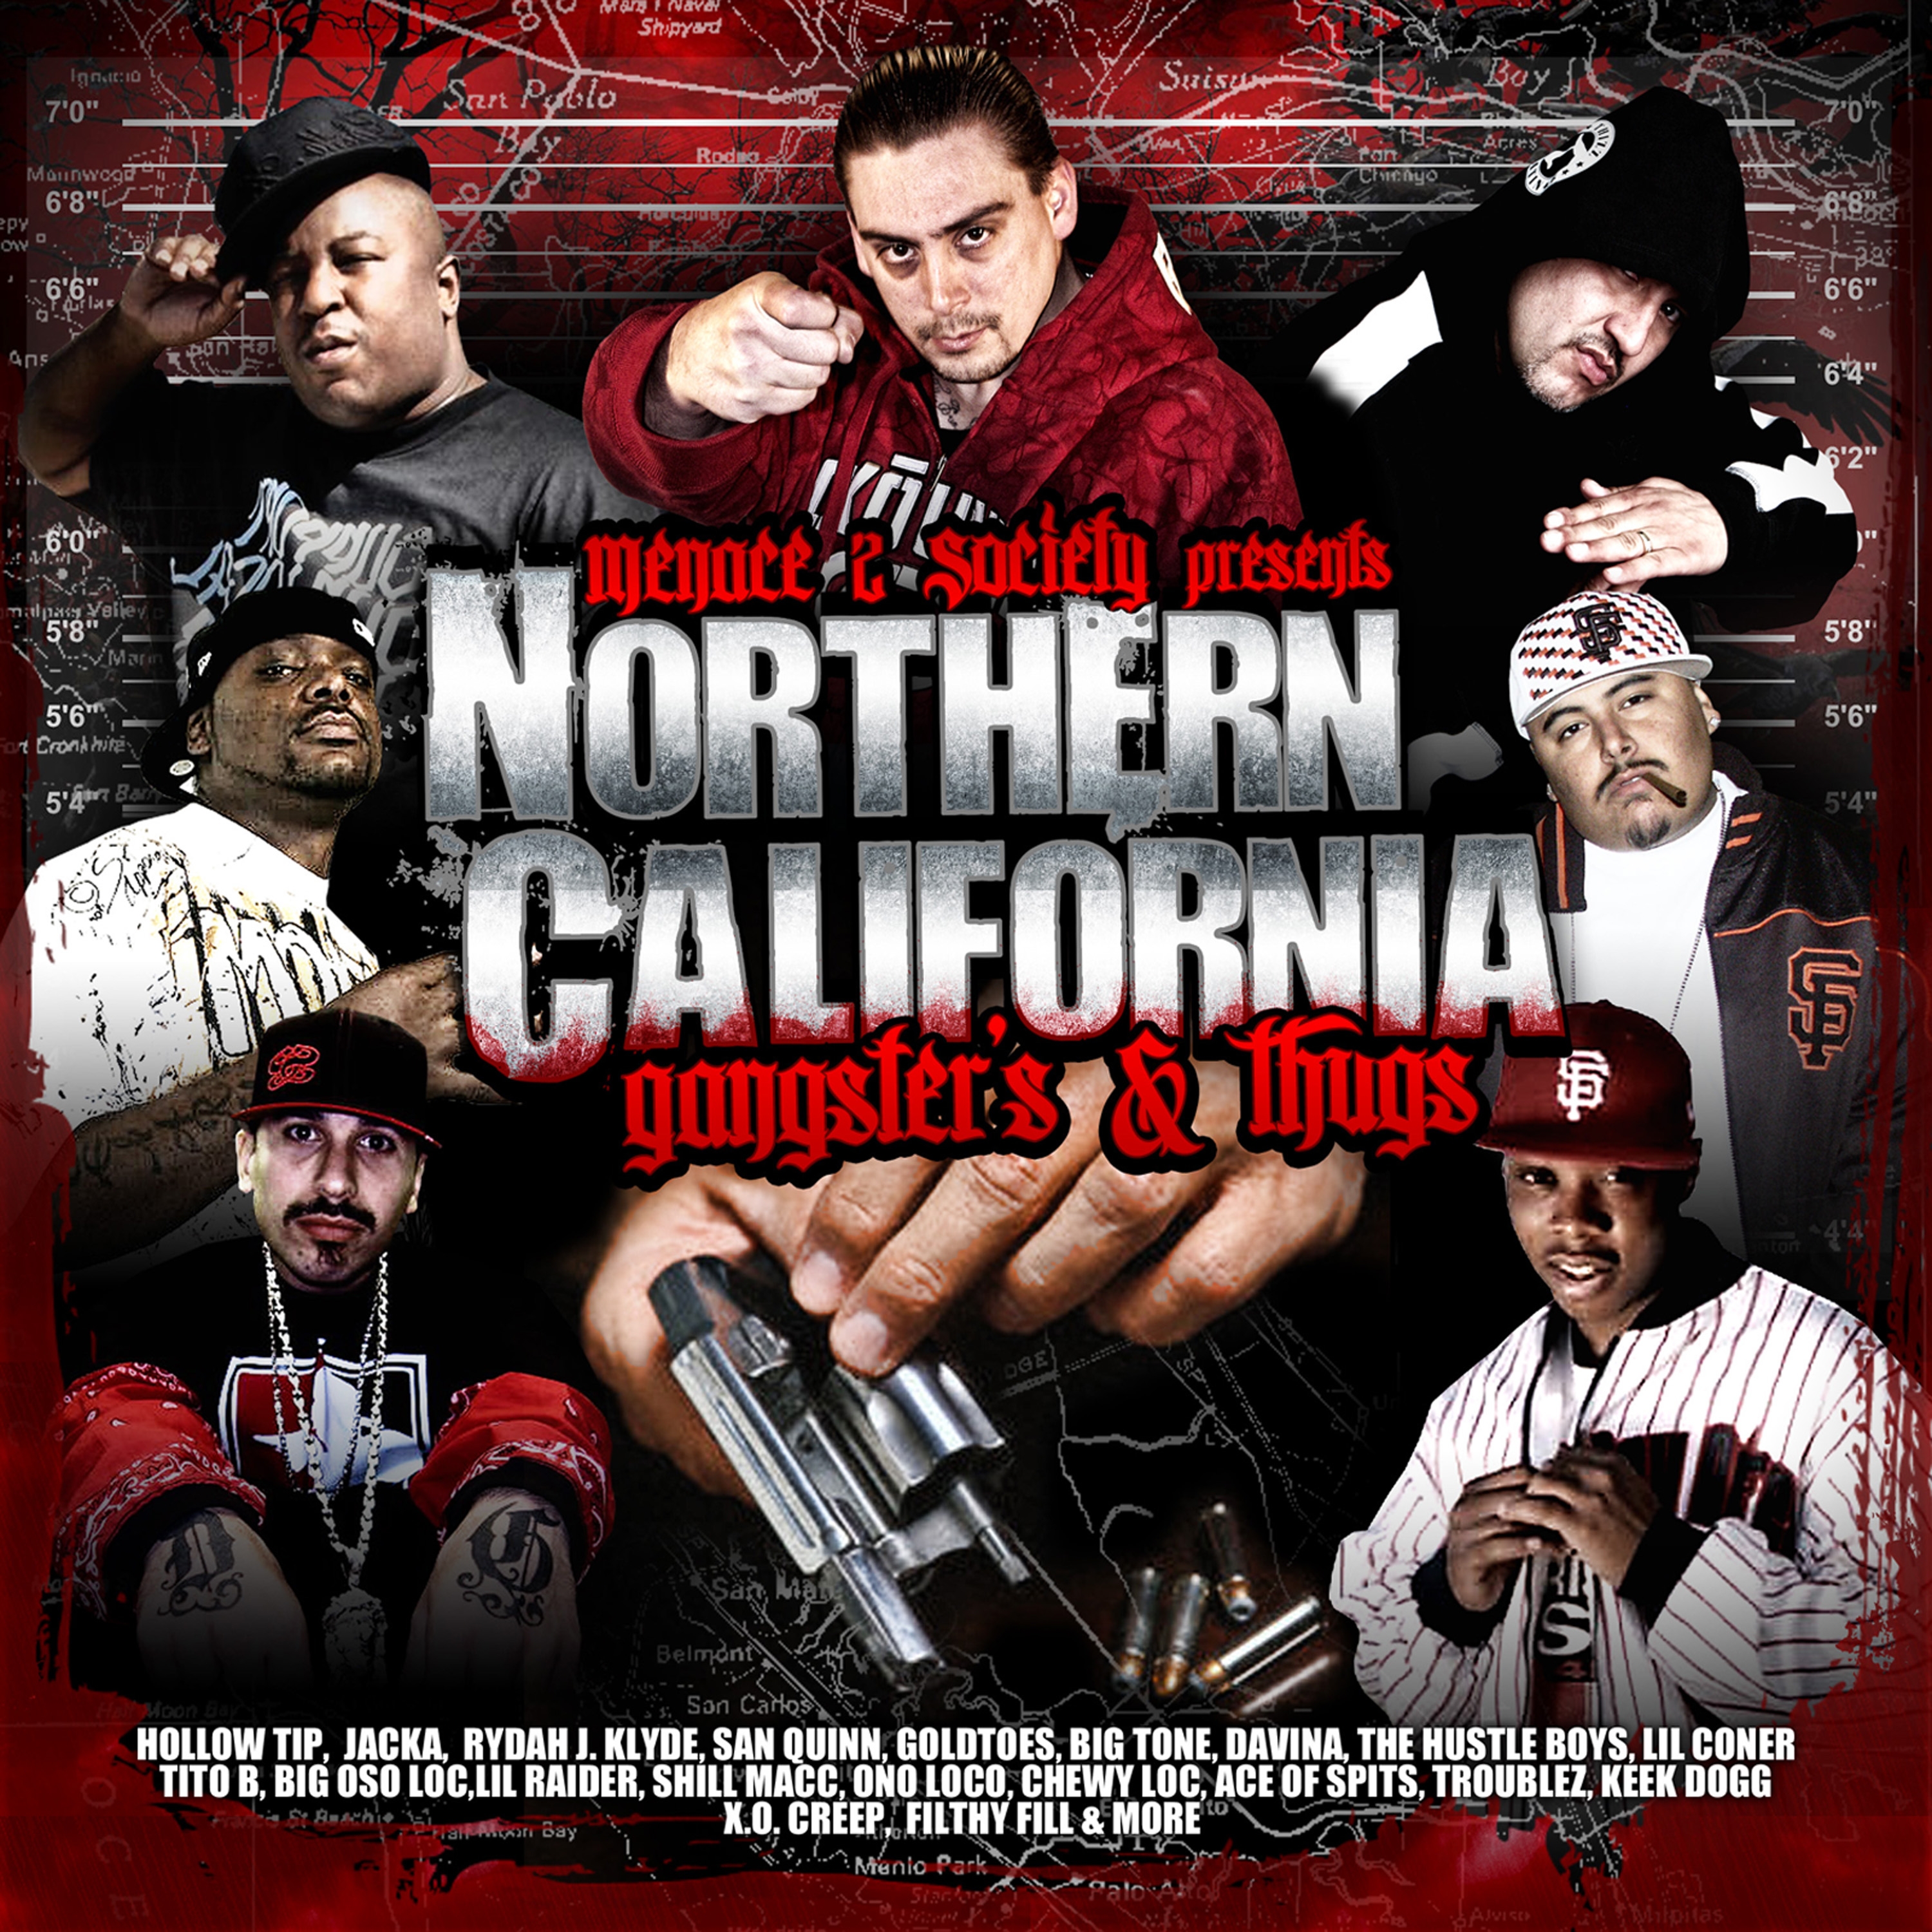 Menace 2 Society Presents: Northern California Gangsters & Thugs, Vol. 1